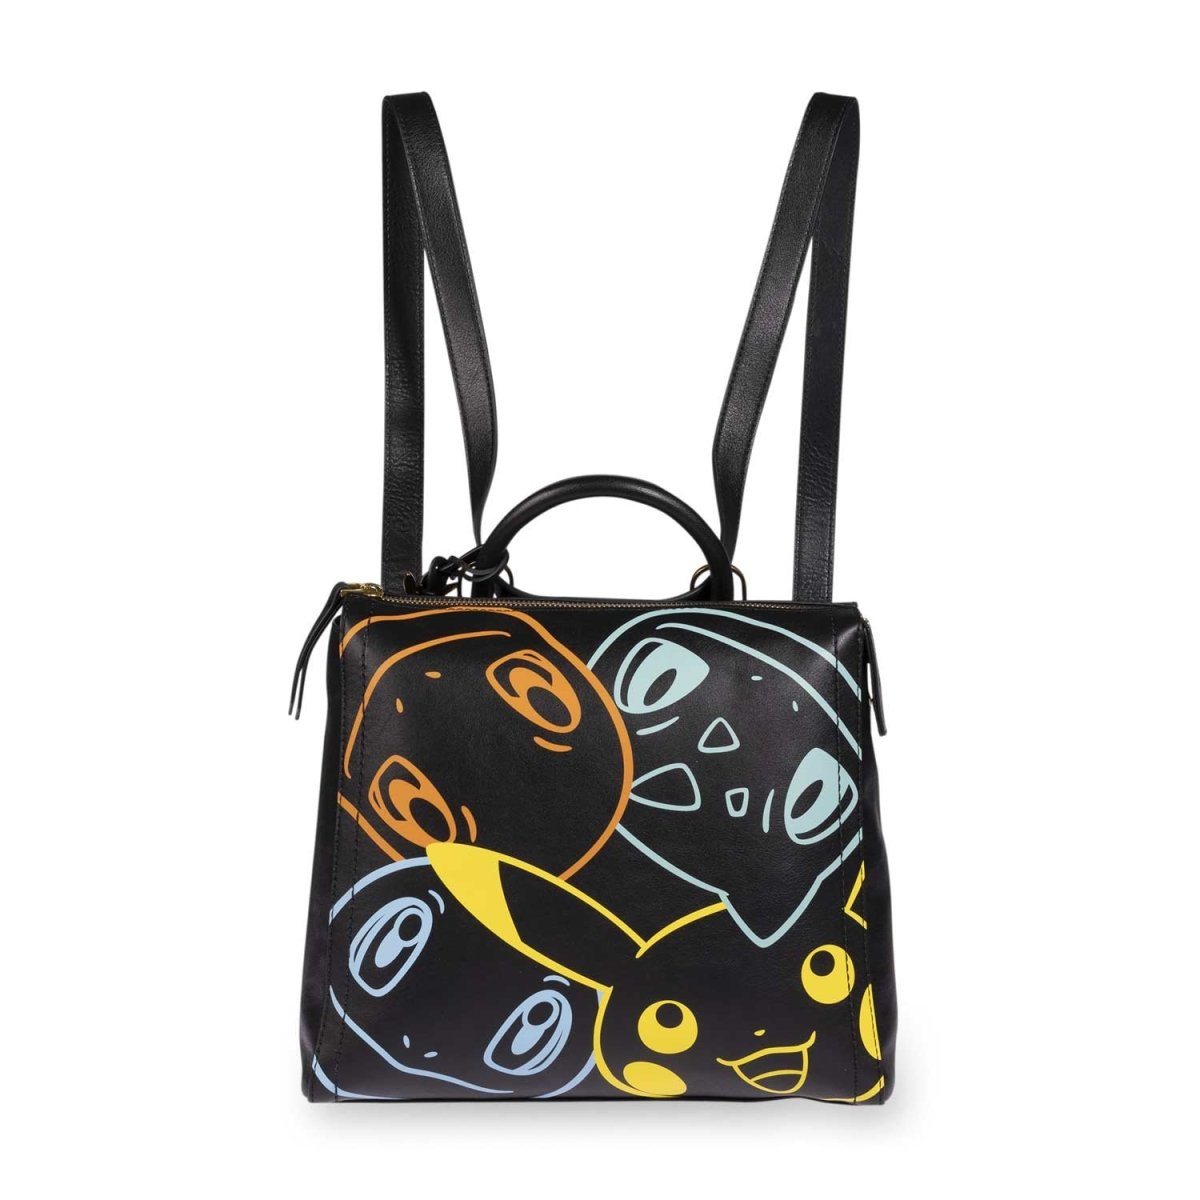 Retro Fossil brown pebbled leather mini backpack purse casual Boho festival  | eBay